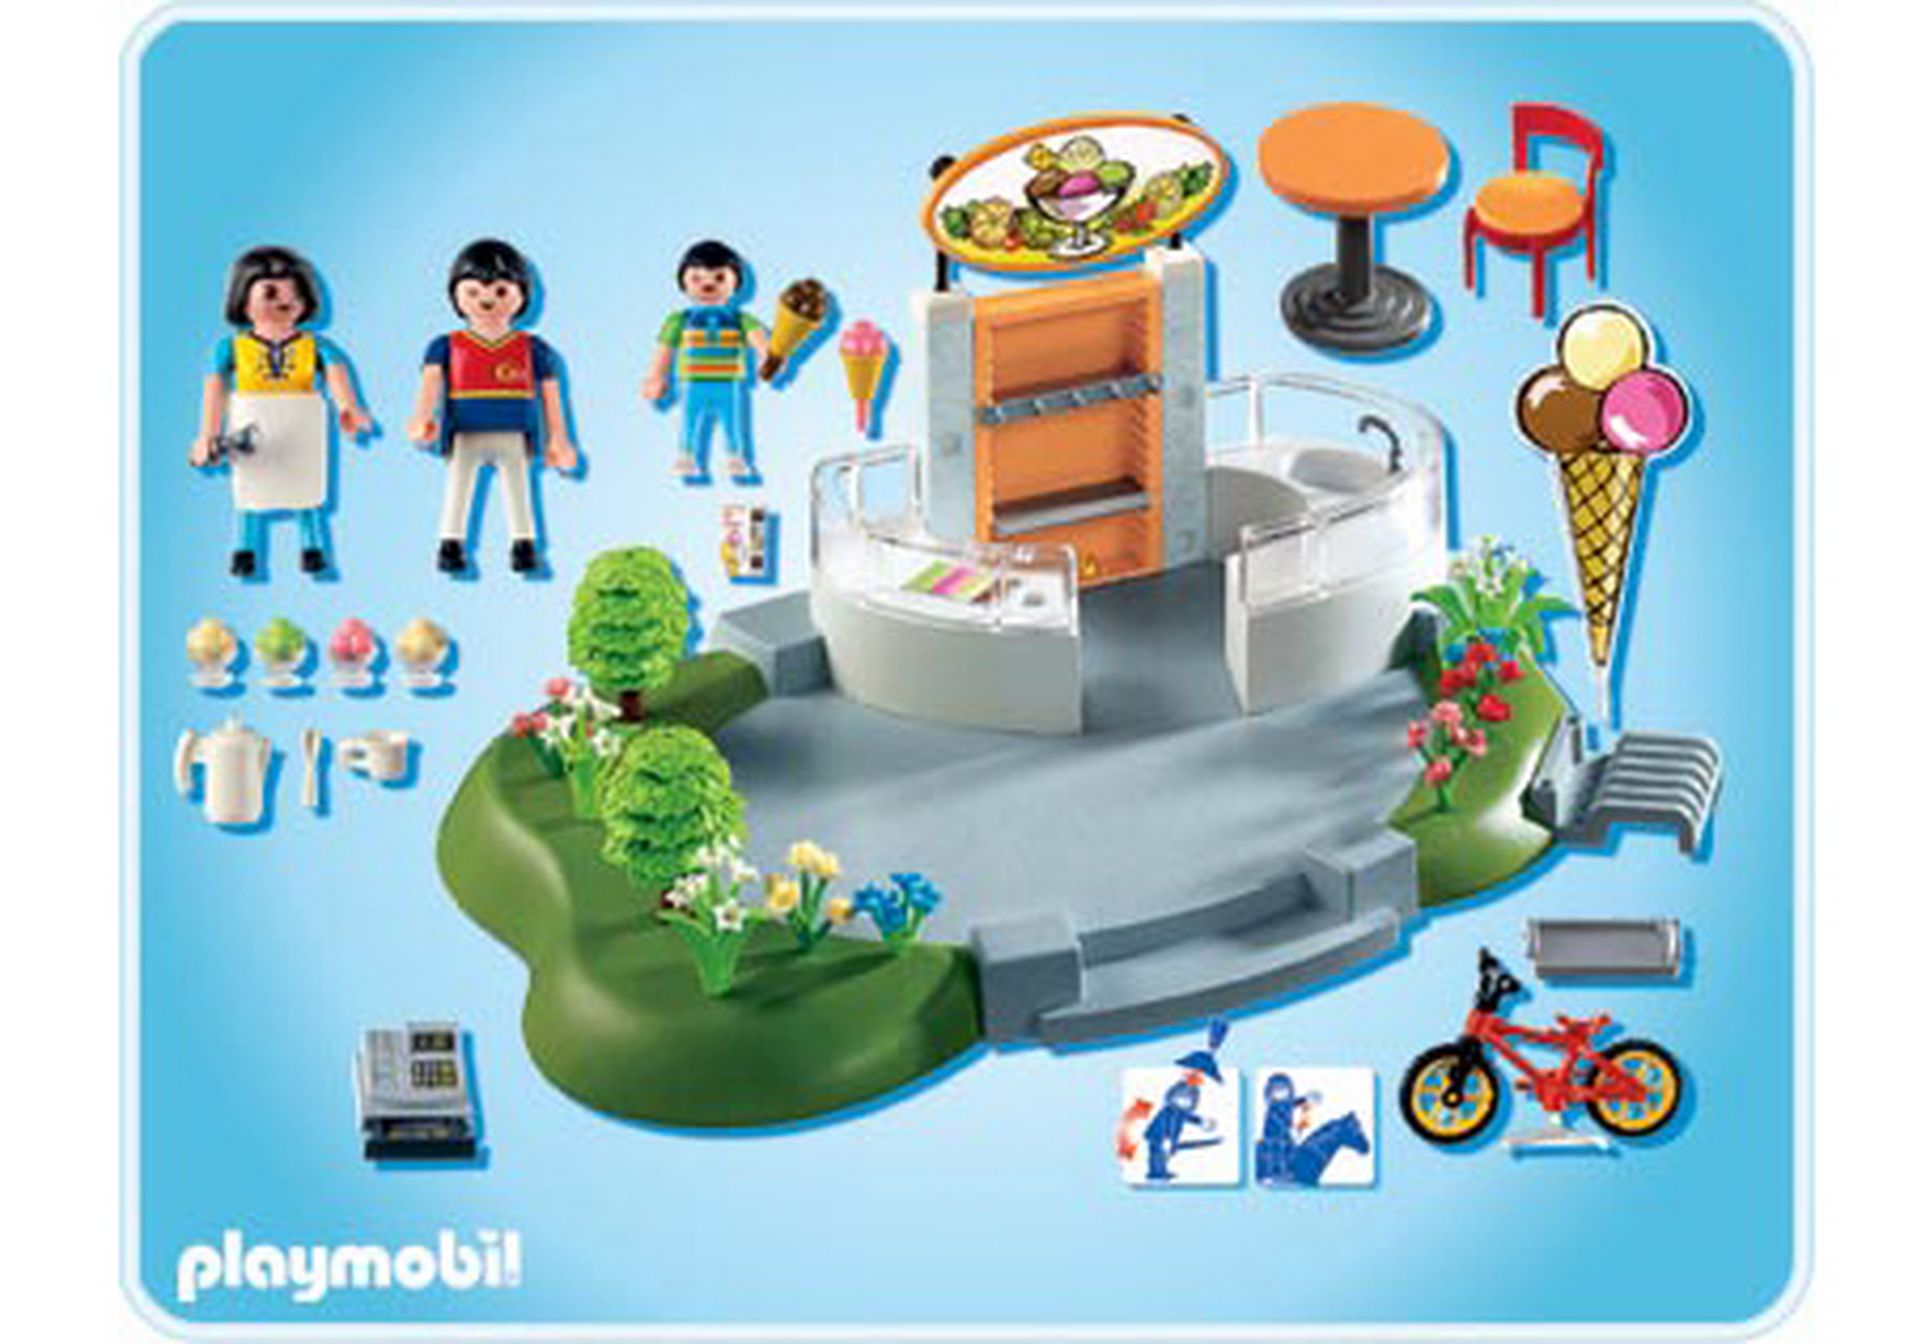 Playmobil 4134  Eisdiele komplett  ohne OVP 